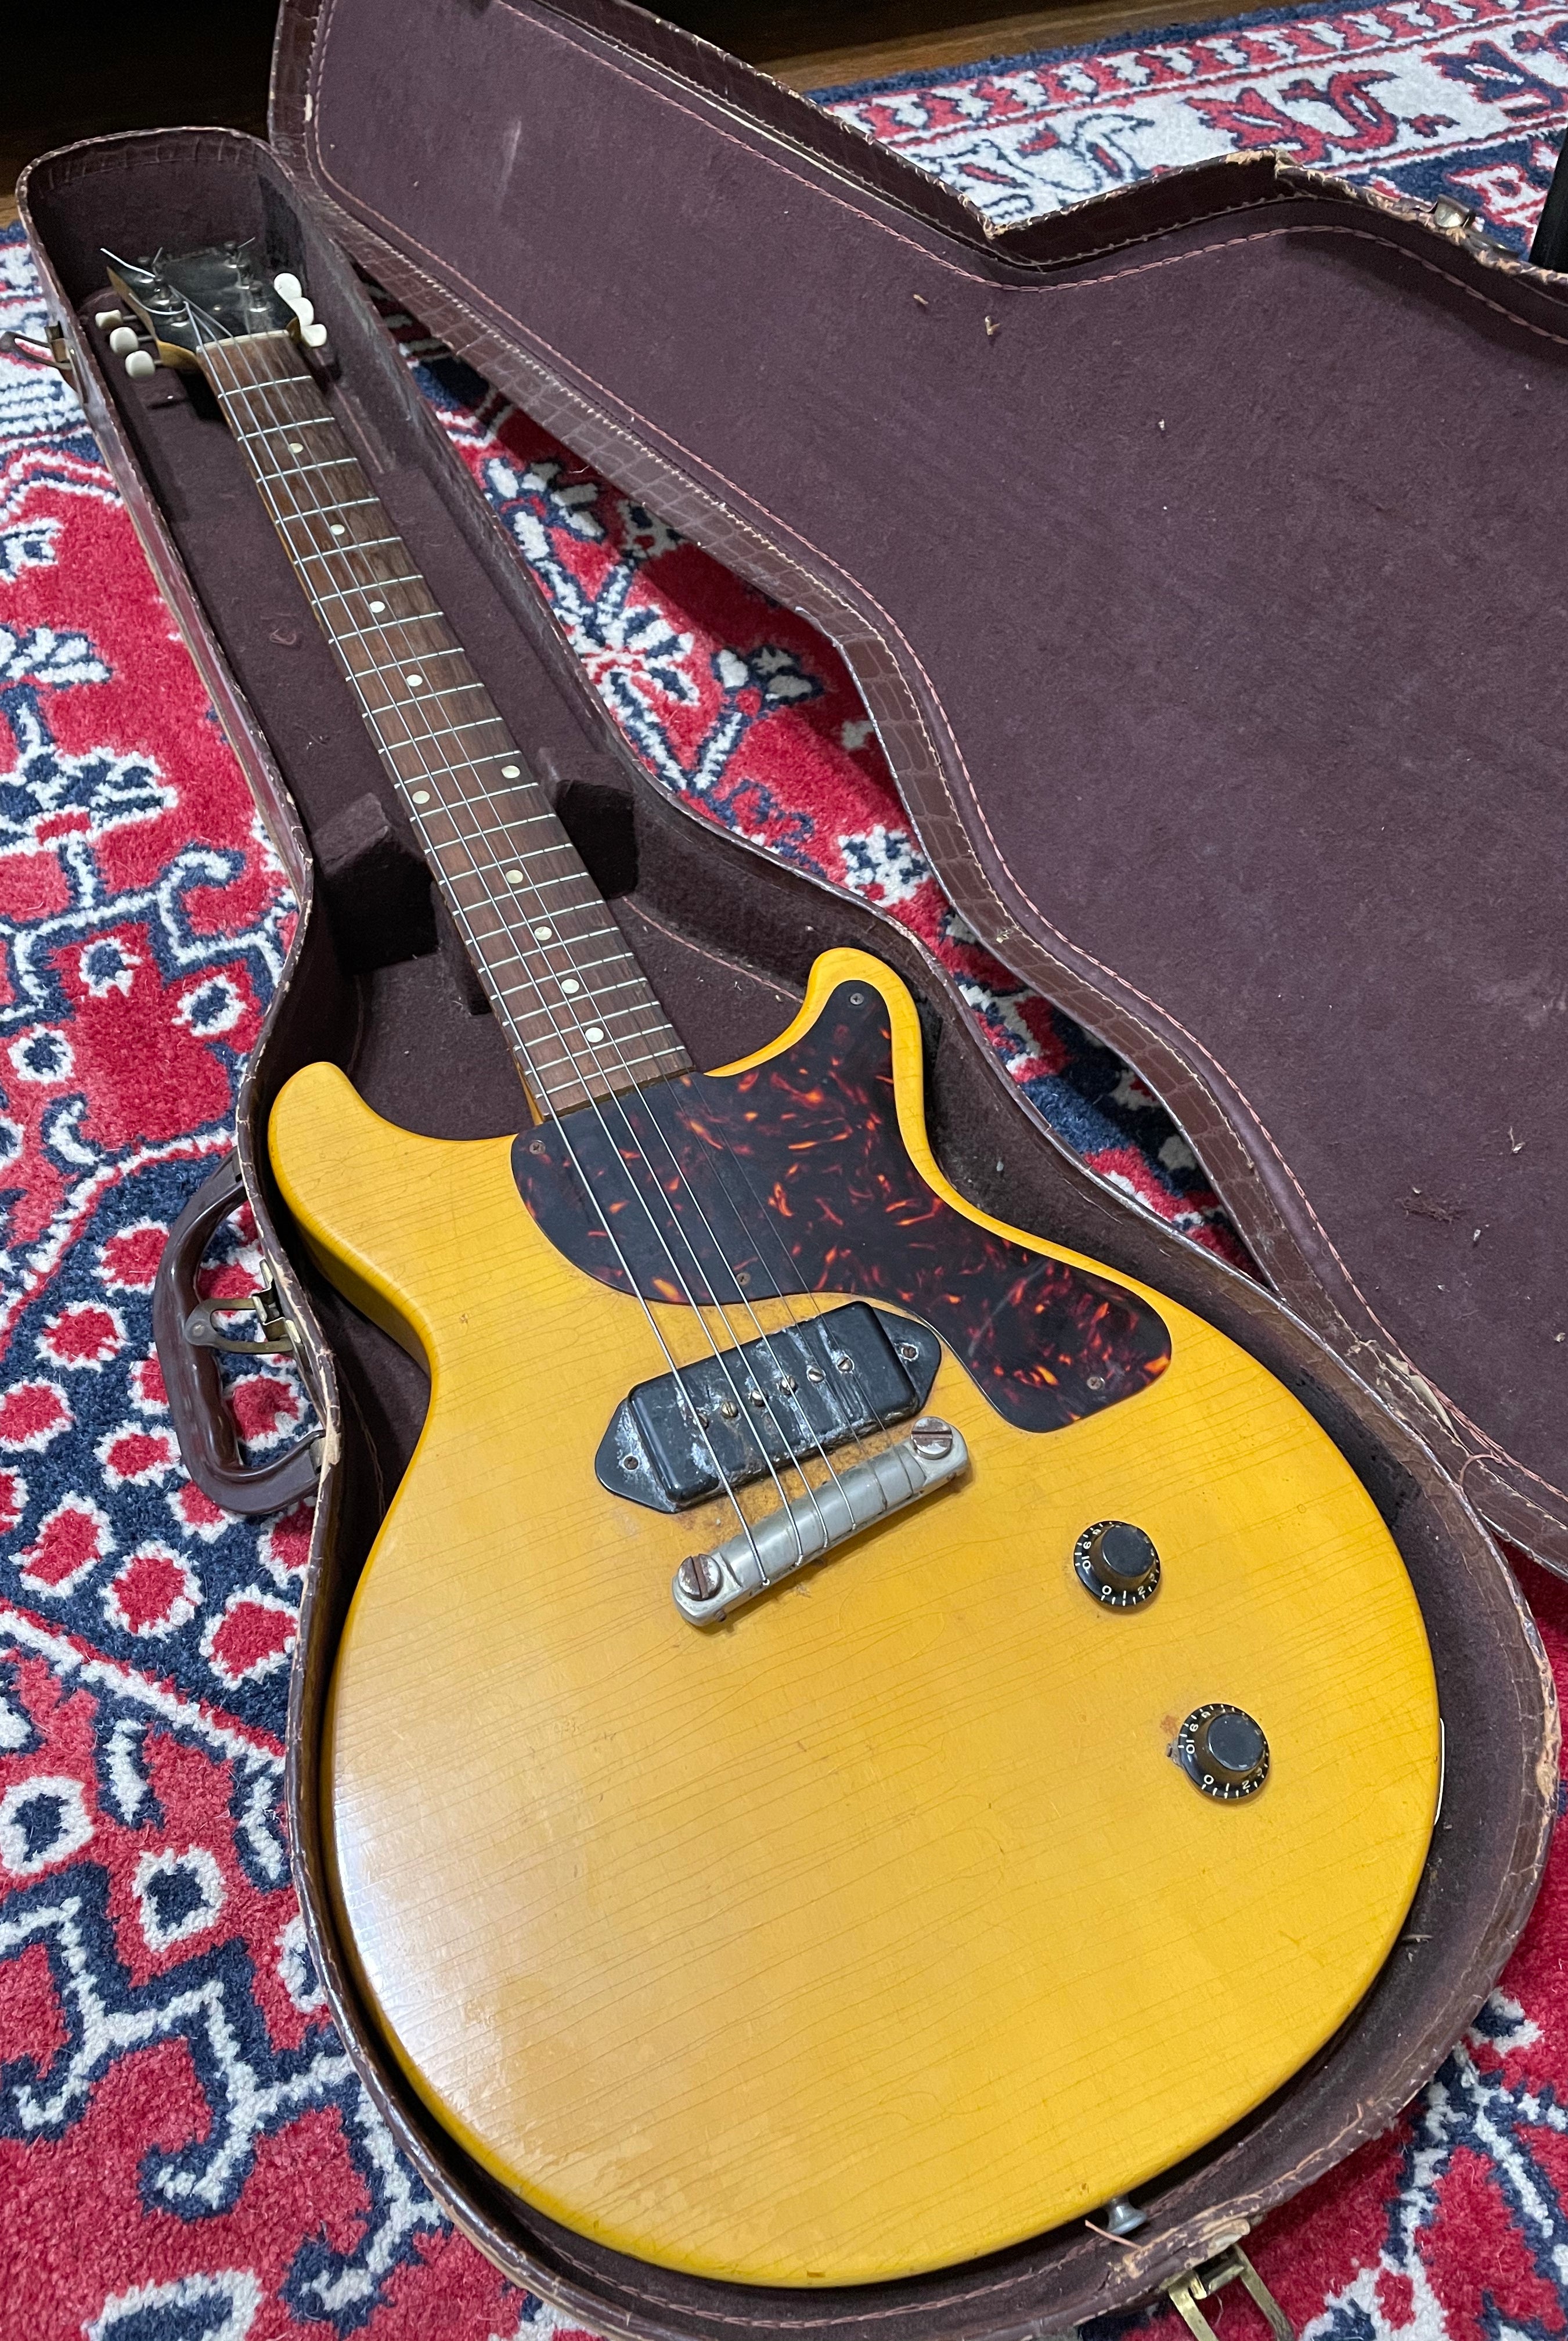 1958 Gibson Les Paul TV Model yellow junior double cut